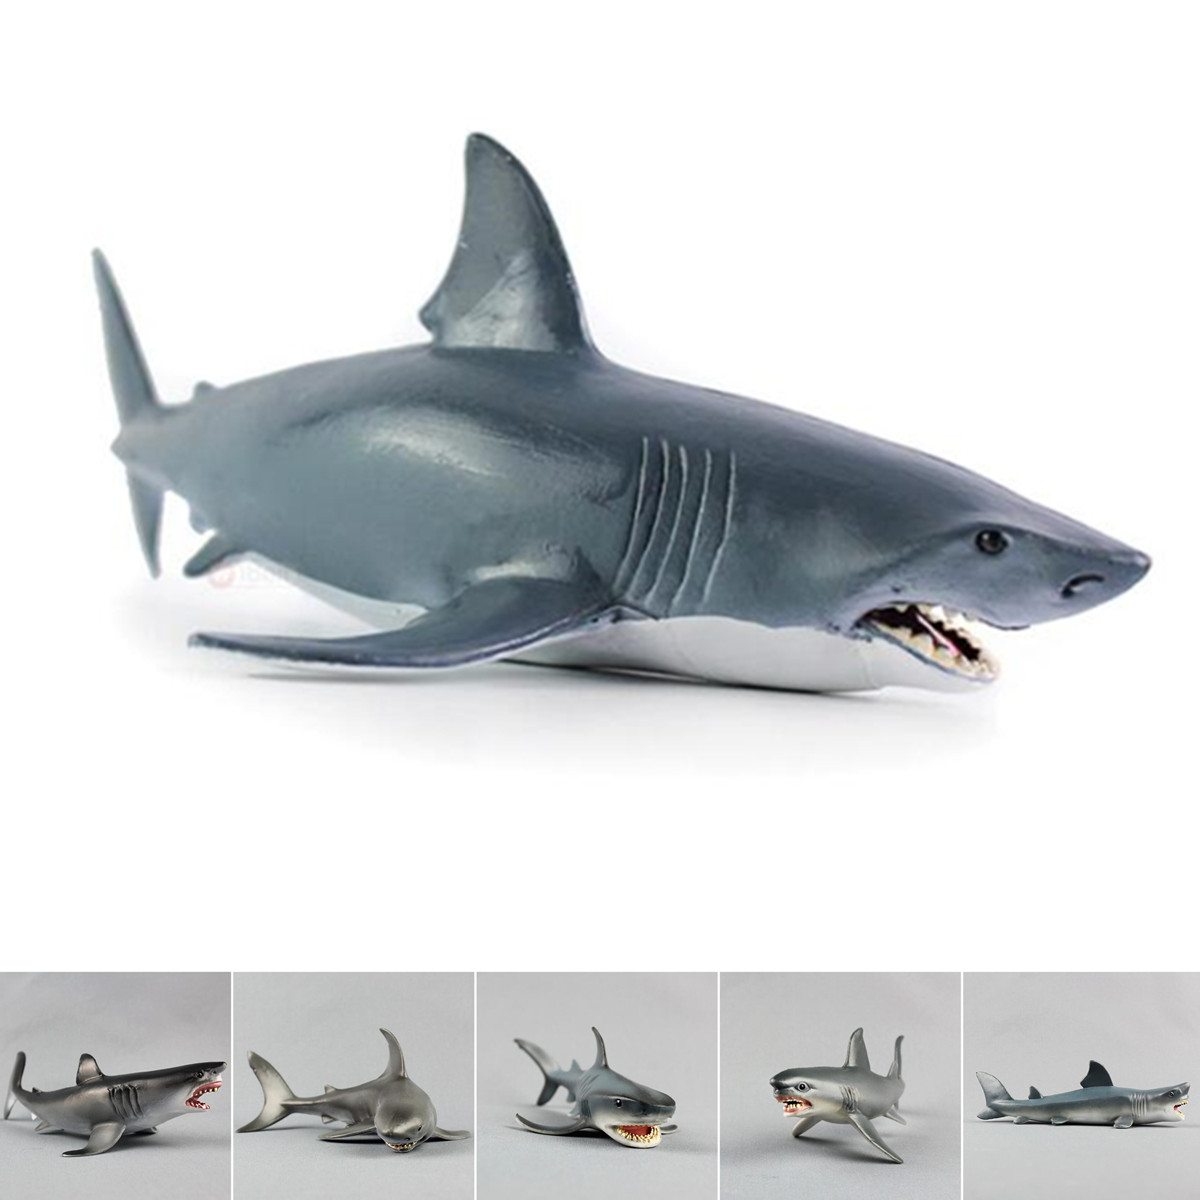 

Ocean Sea Life Marine Animals Shark Model Educational Learning Toys for Kid Gift